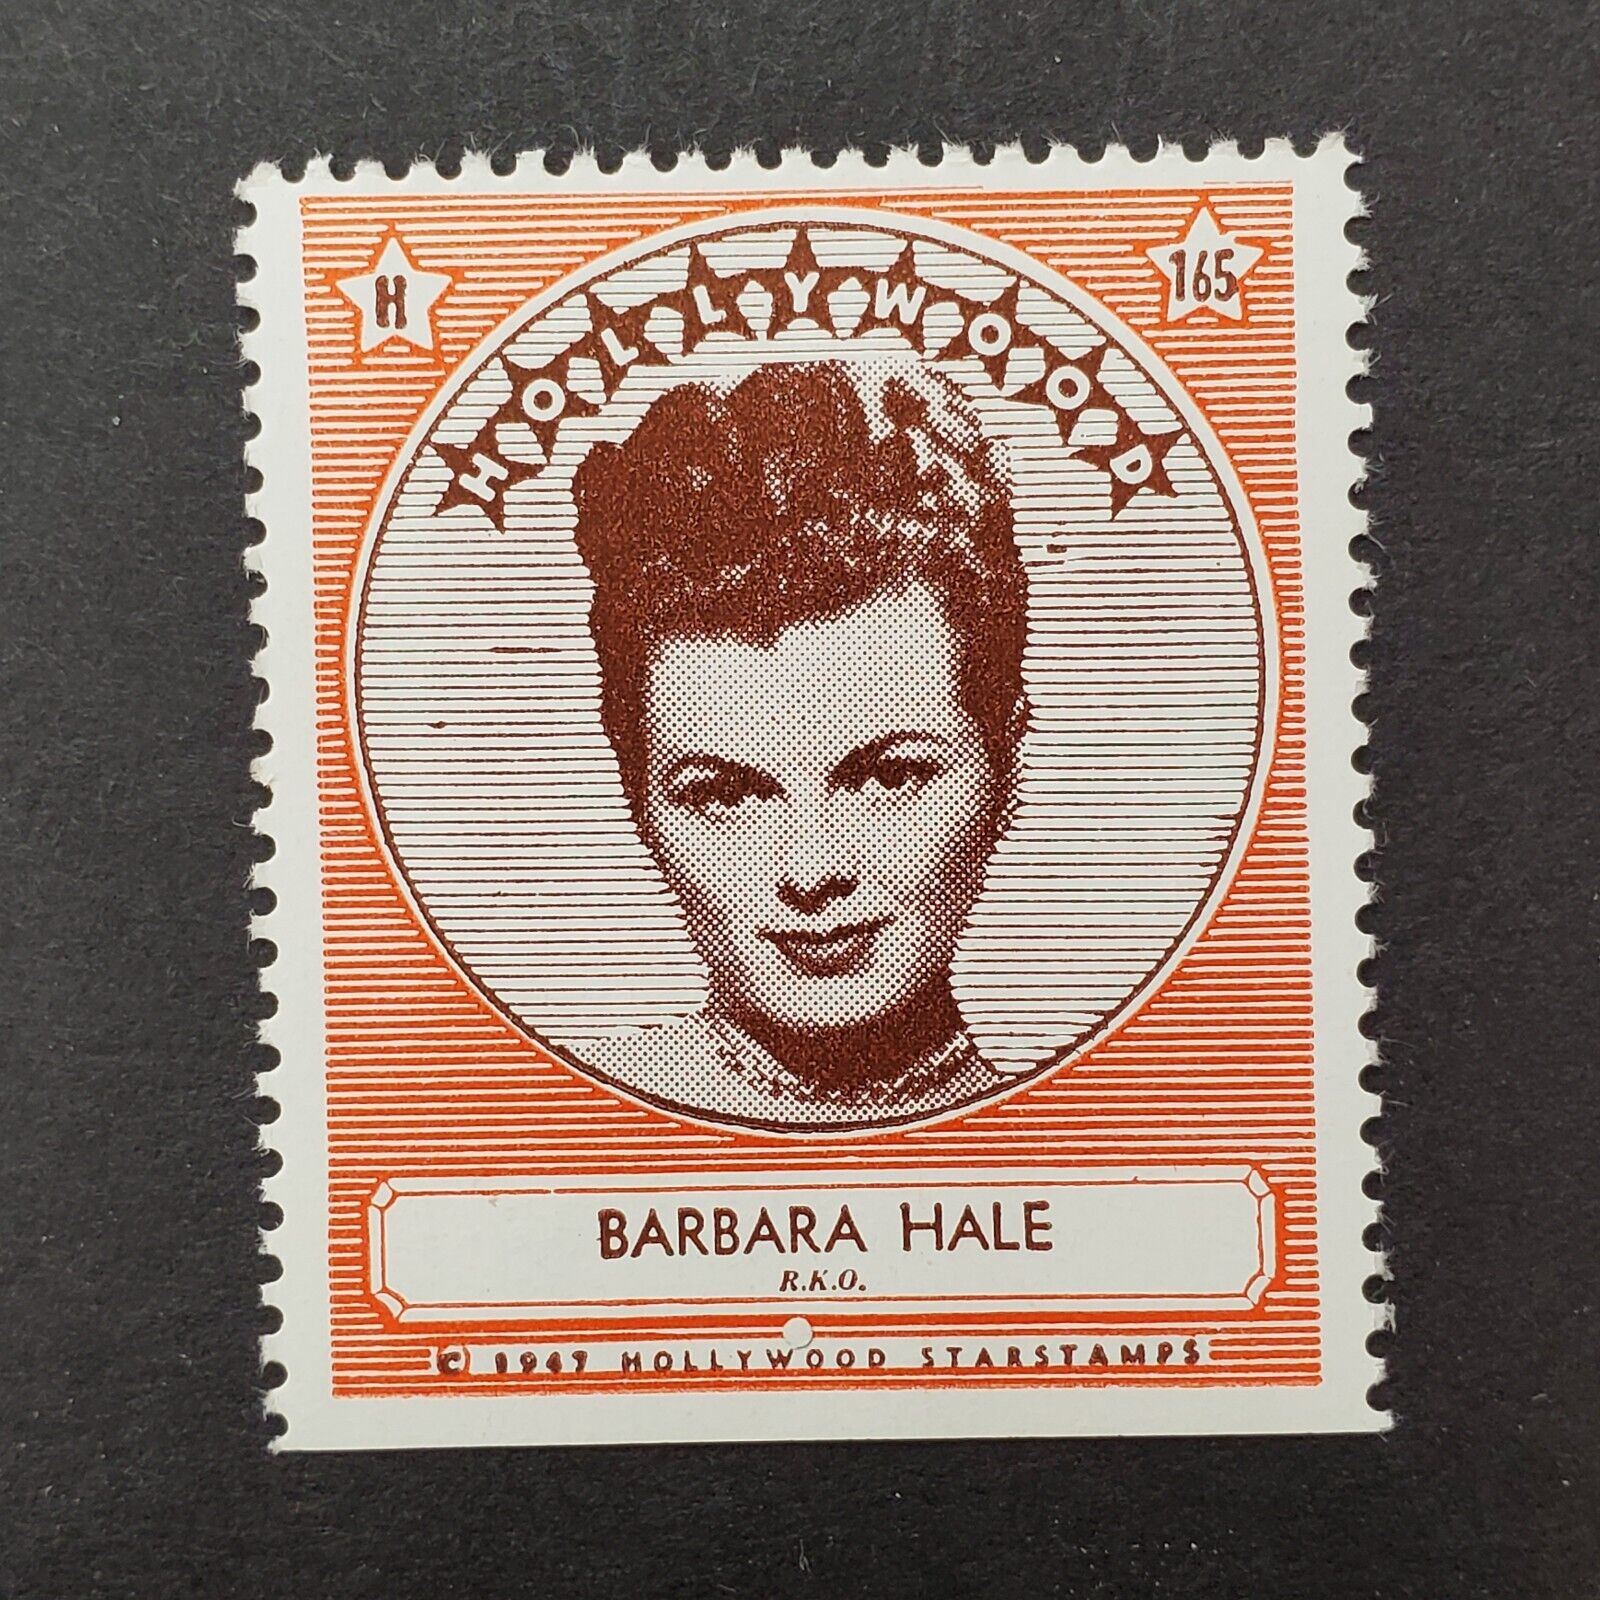 Barbara Hale 1947 Hollywood Screen Movie Stars Stamp Trading Card